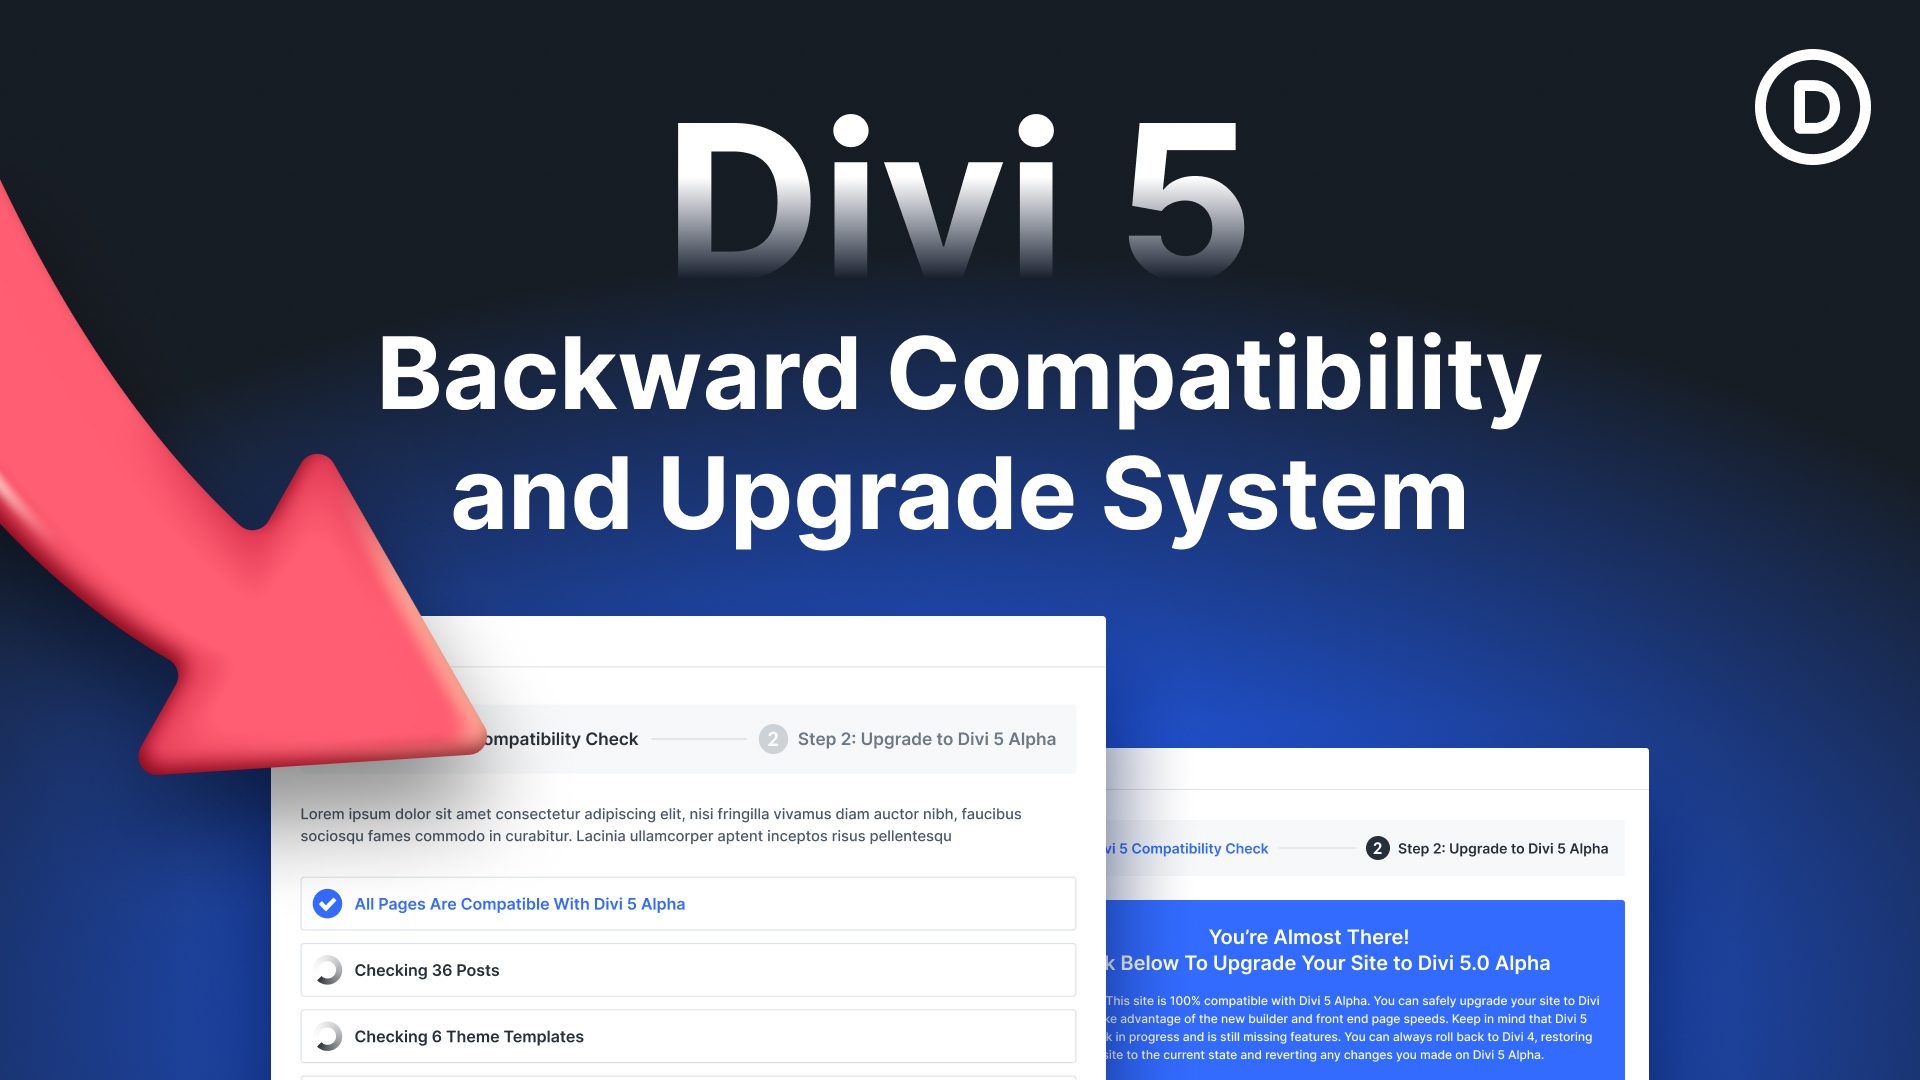 Divi 5 Migration and Backward Compatibility